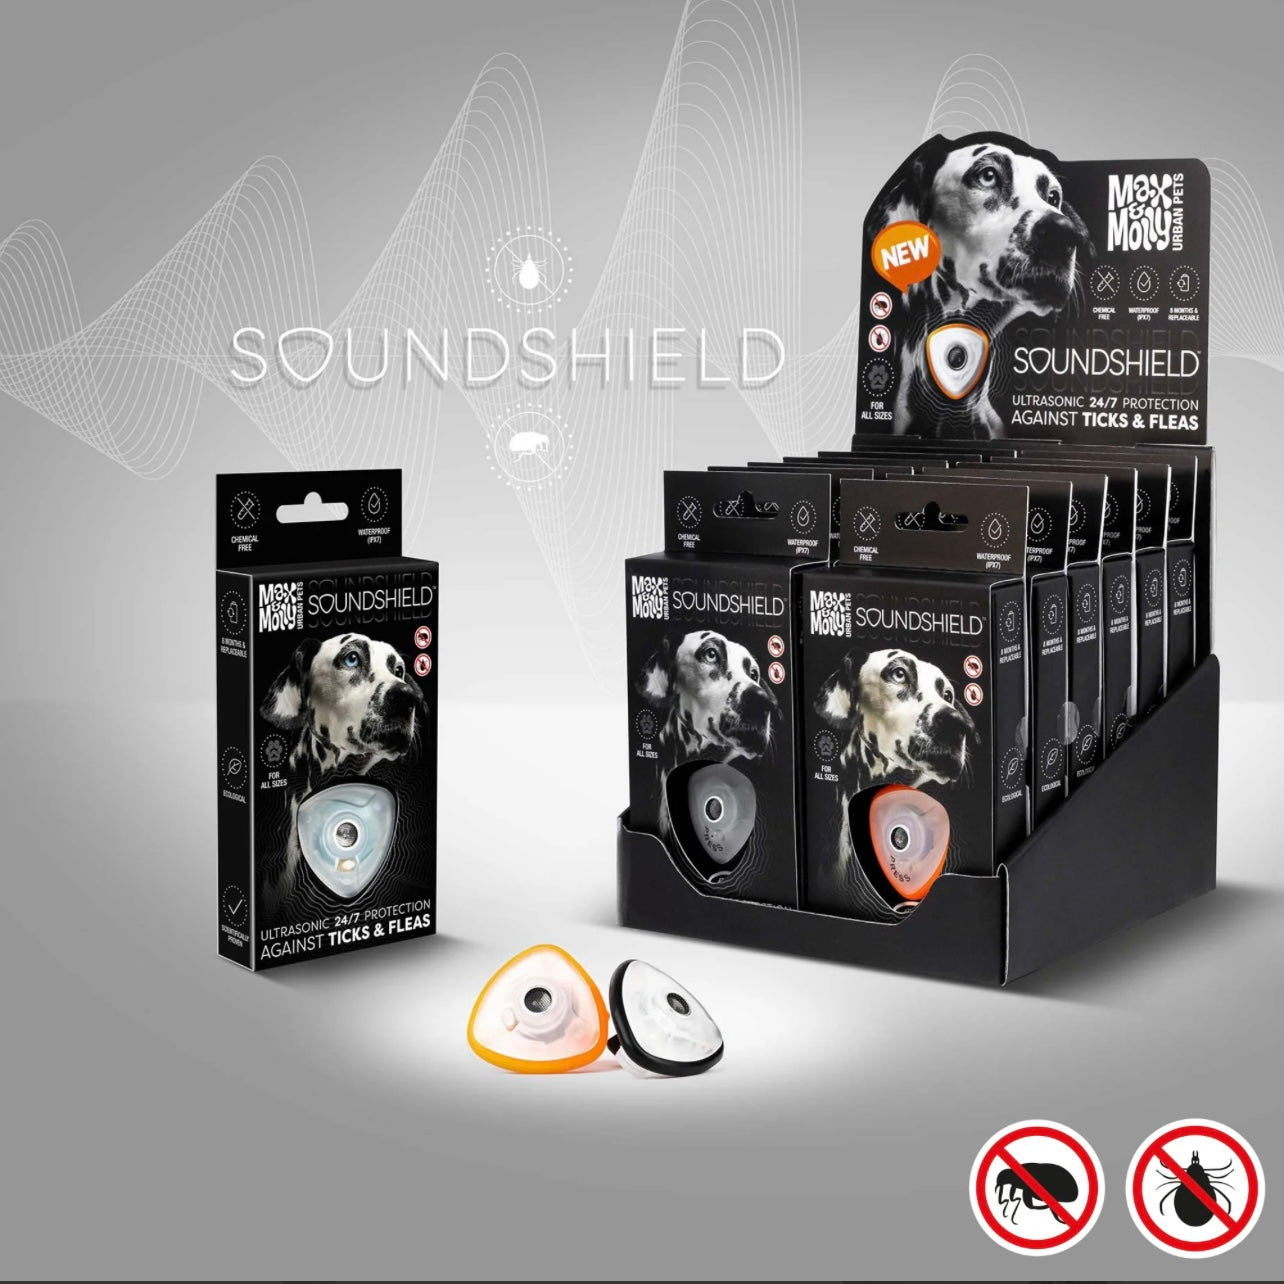 Soundshield - 24/7 Ultrasonic Technology Against Ticks & Fleas - Black